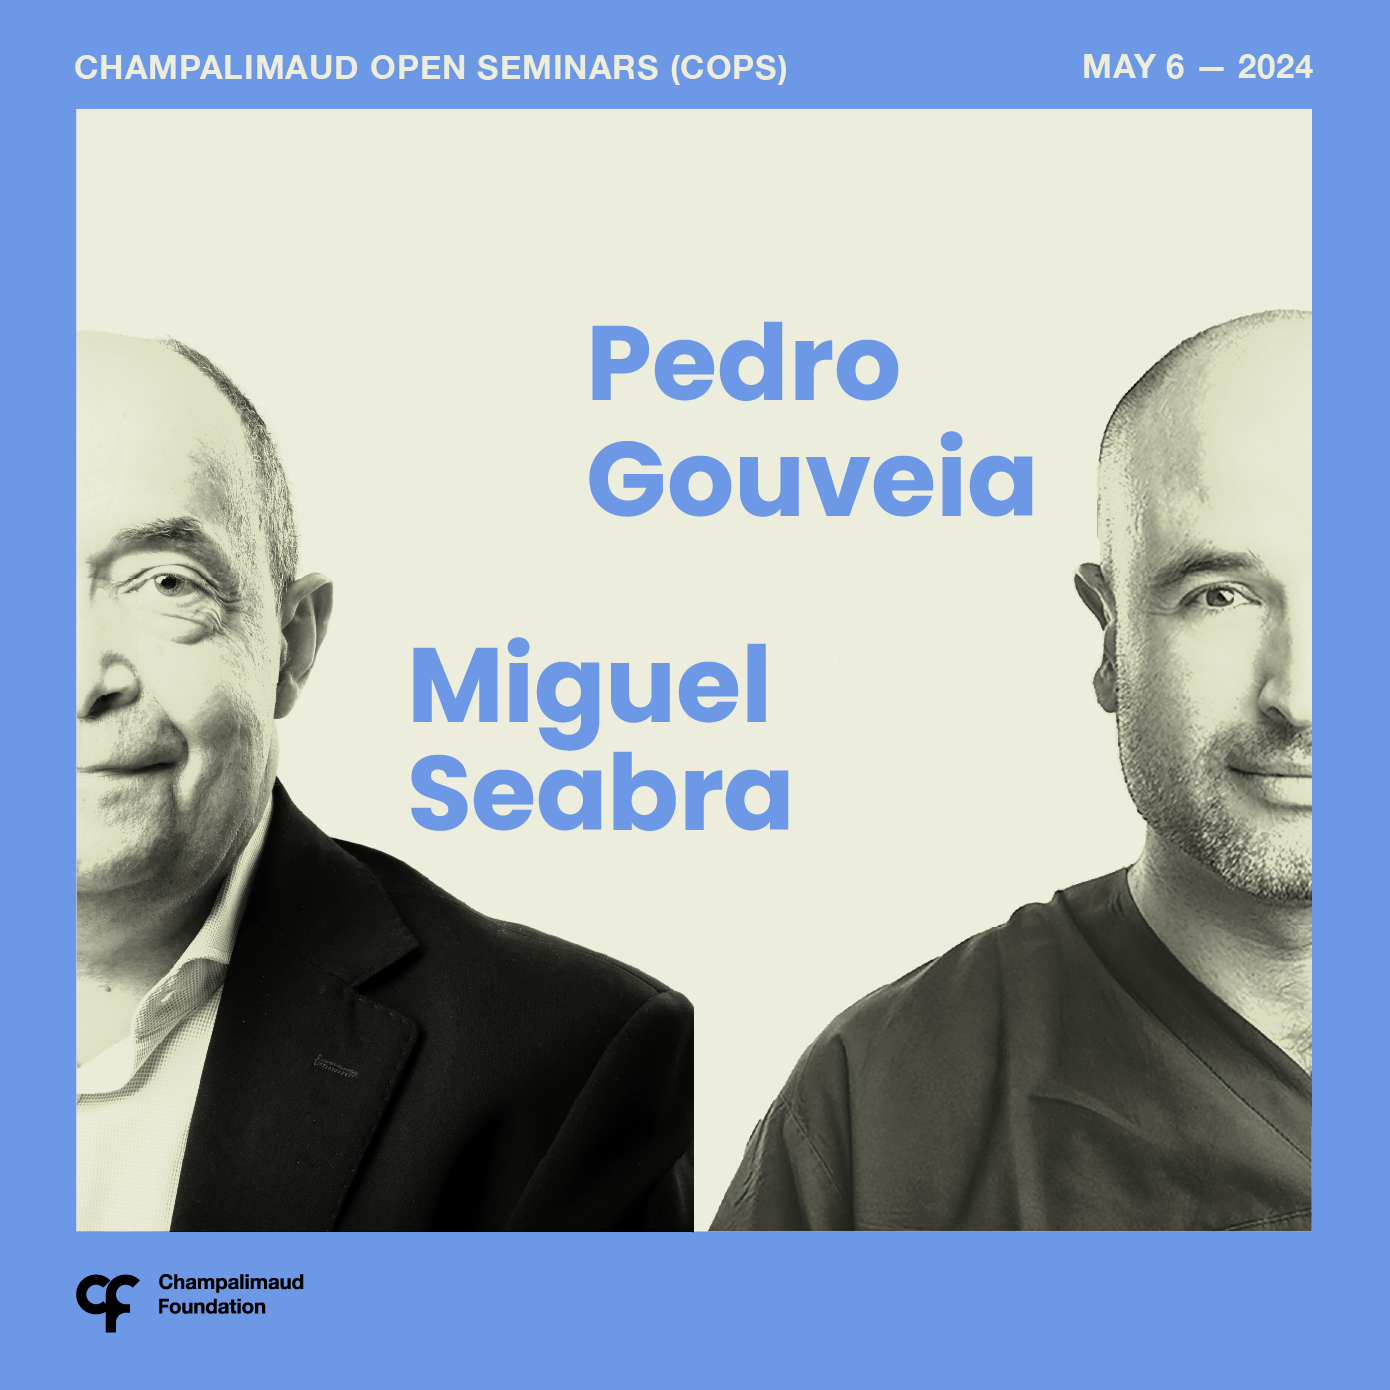 COPS: Miguel Seabra & Pedro Gouveia